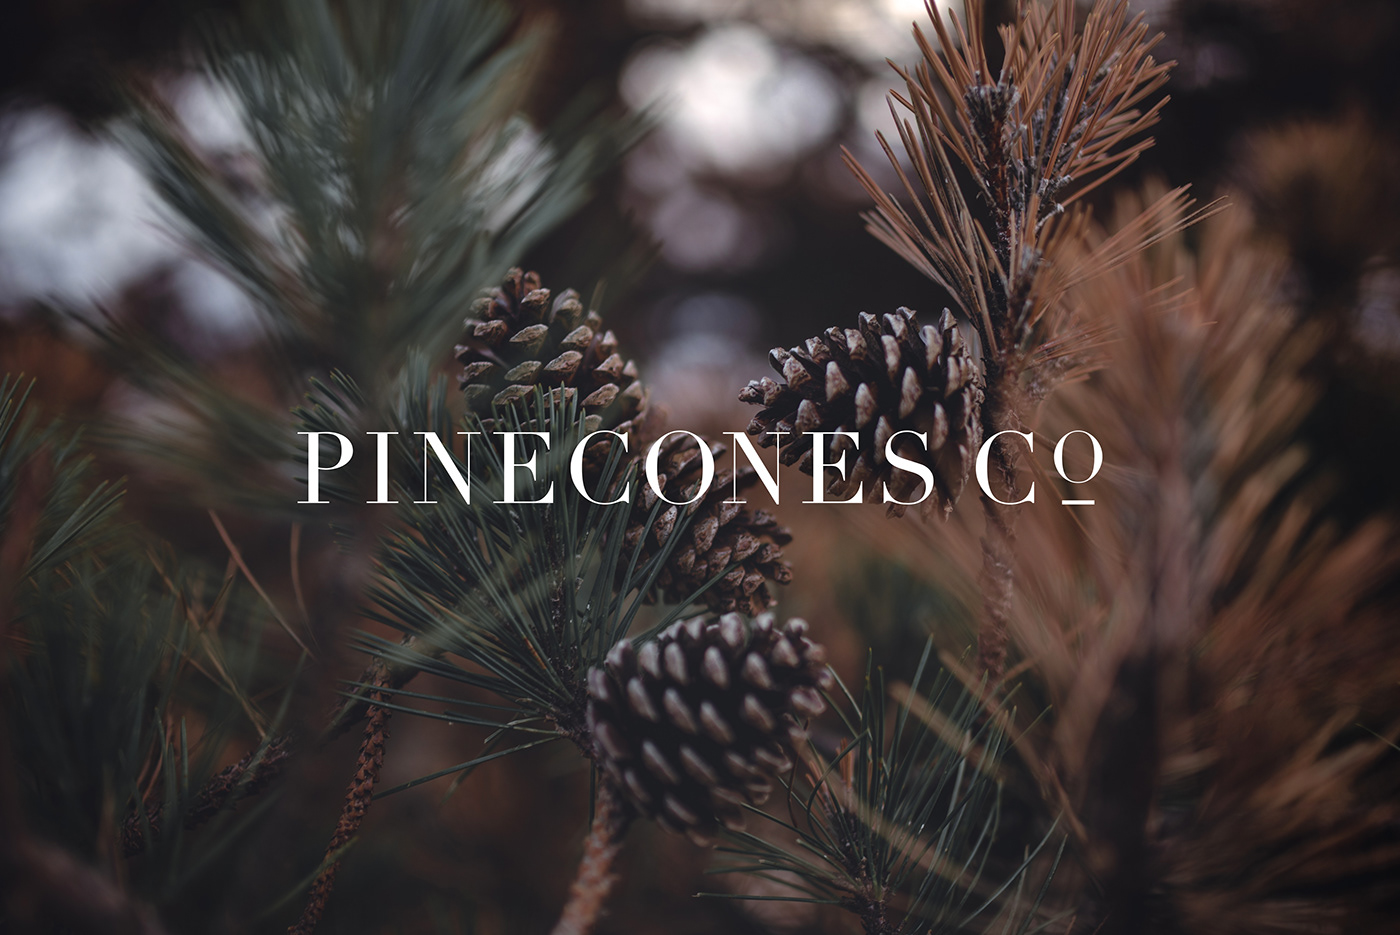 Pinecones Co white logo on background.